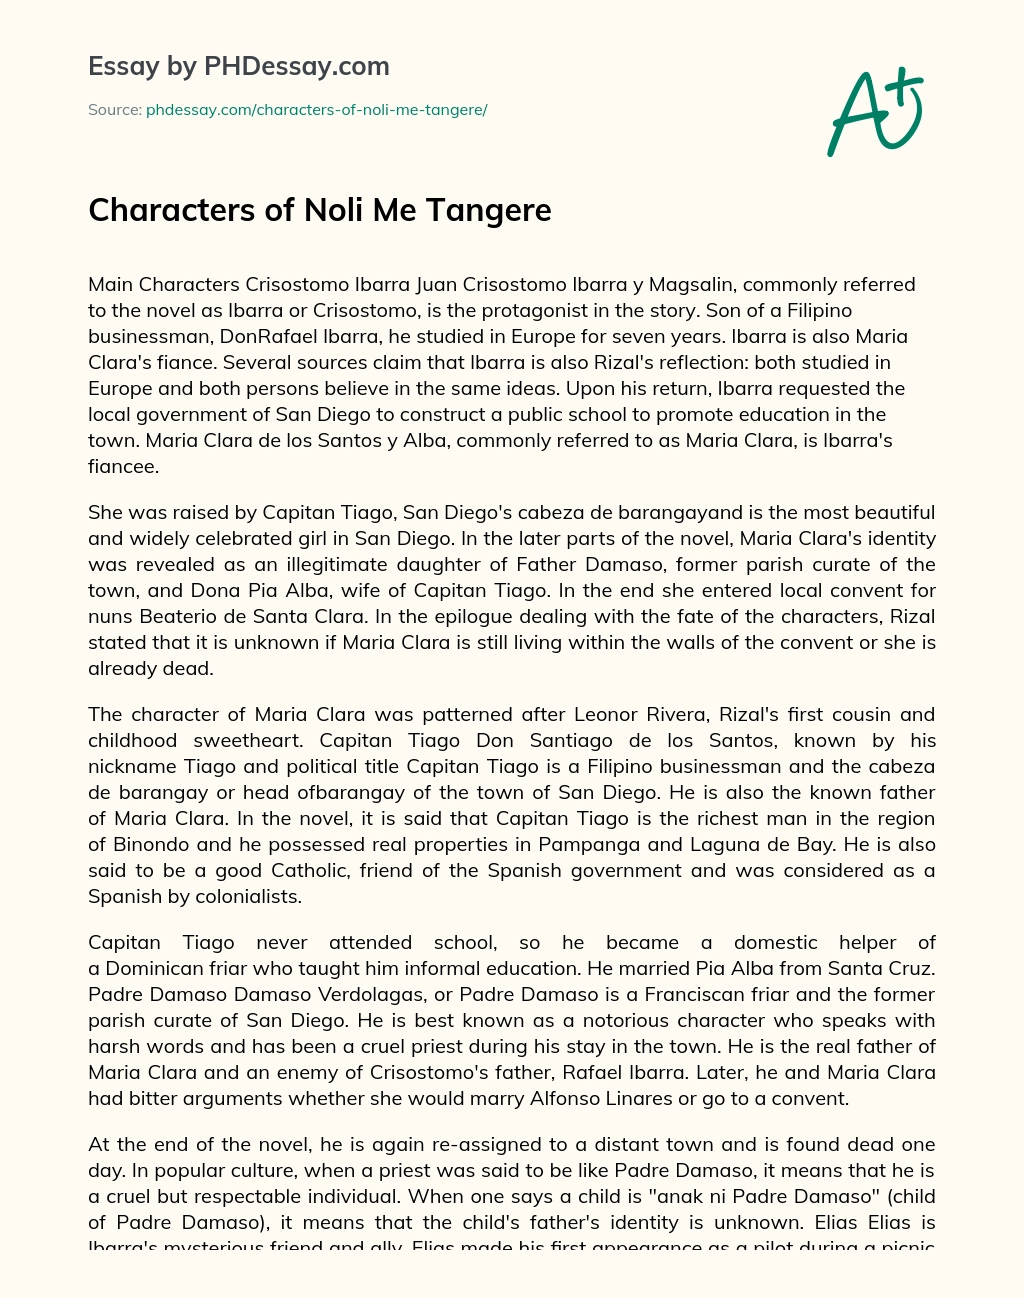 Characters of Noli Me Tangere essay